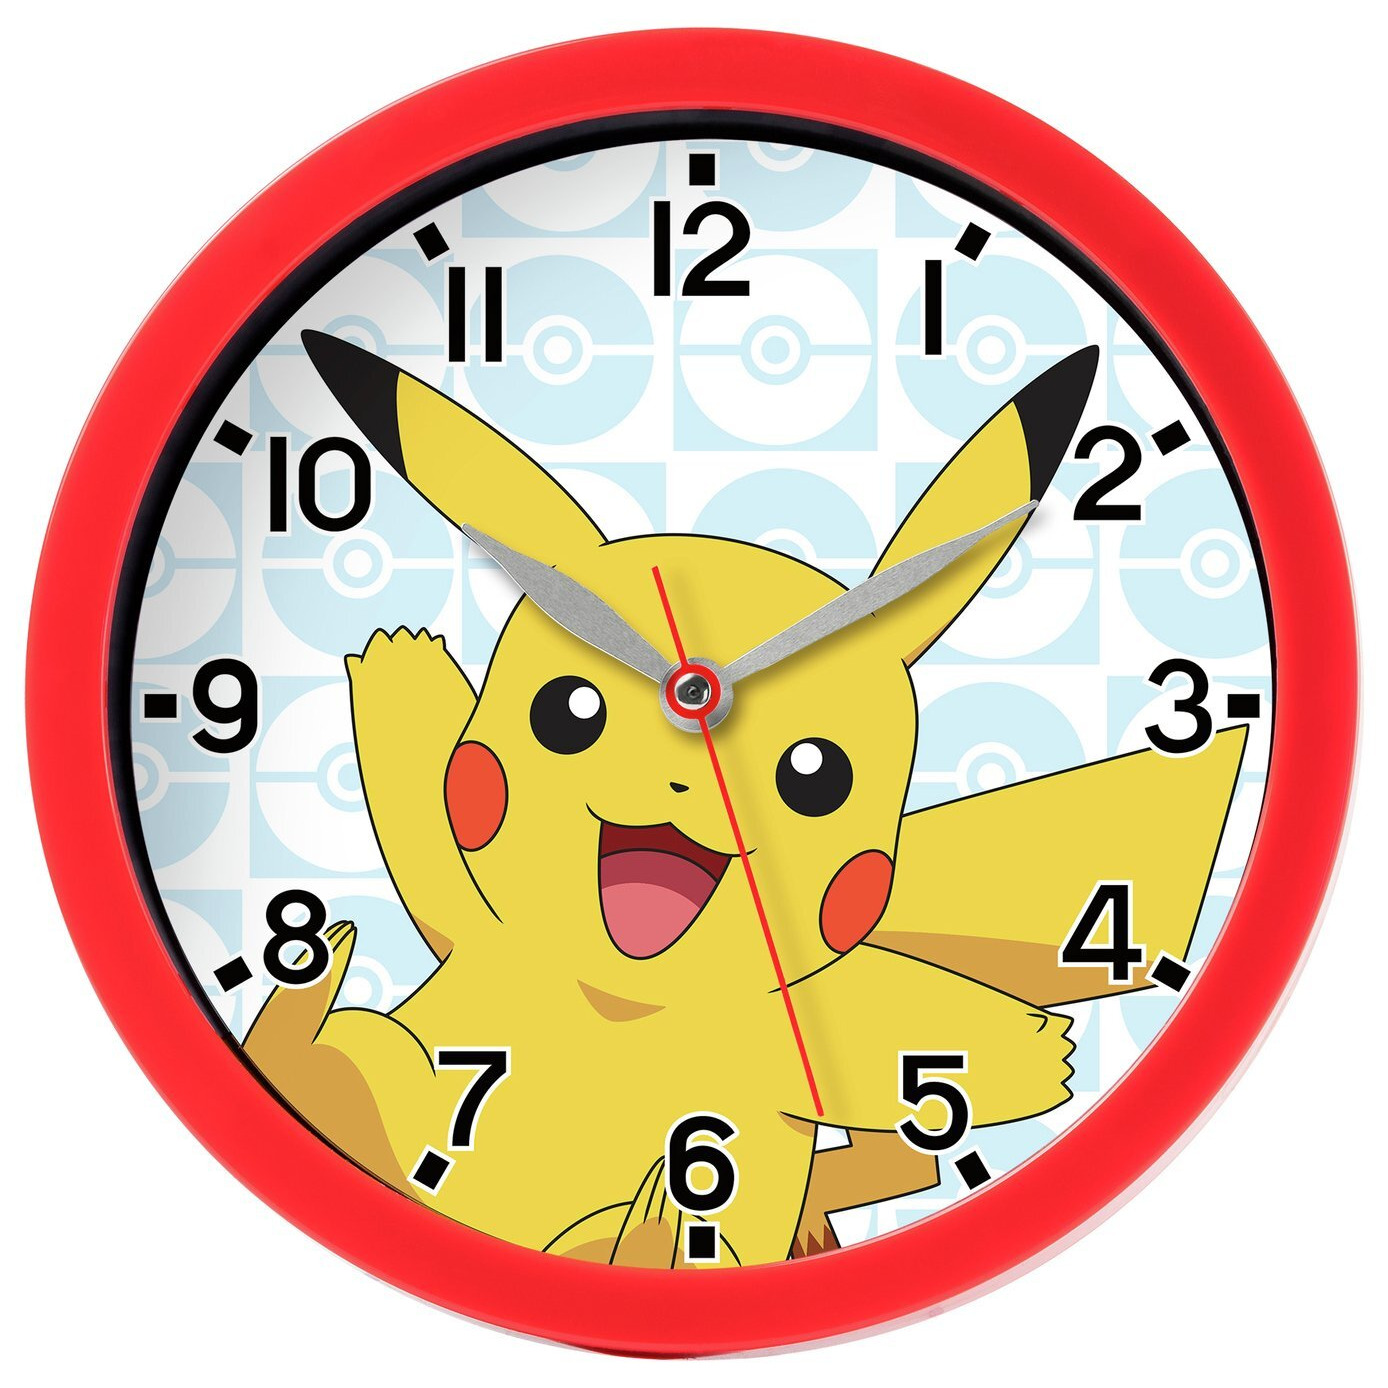 Pokémon Pikachu Kids Wall Clock - Red - image 1